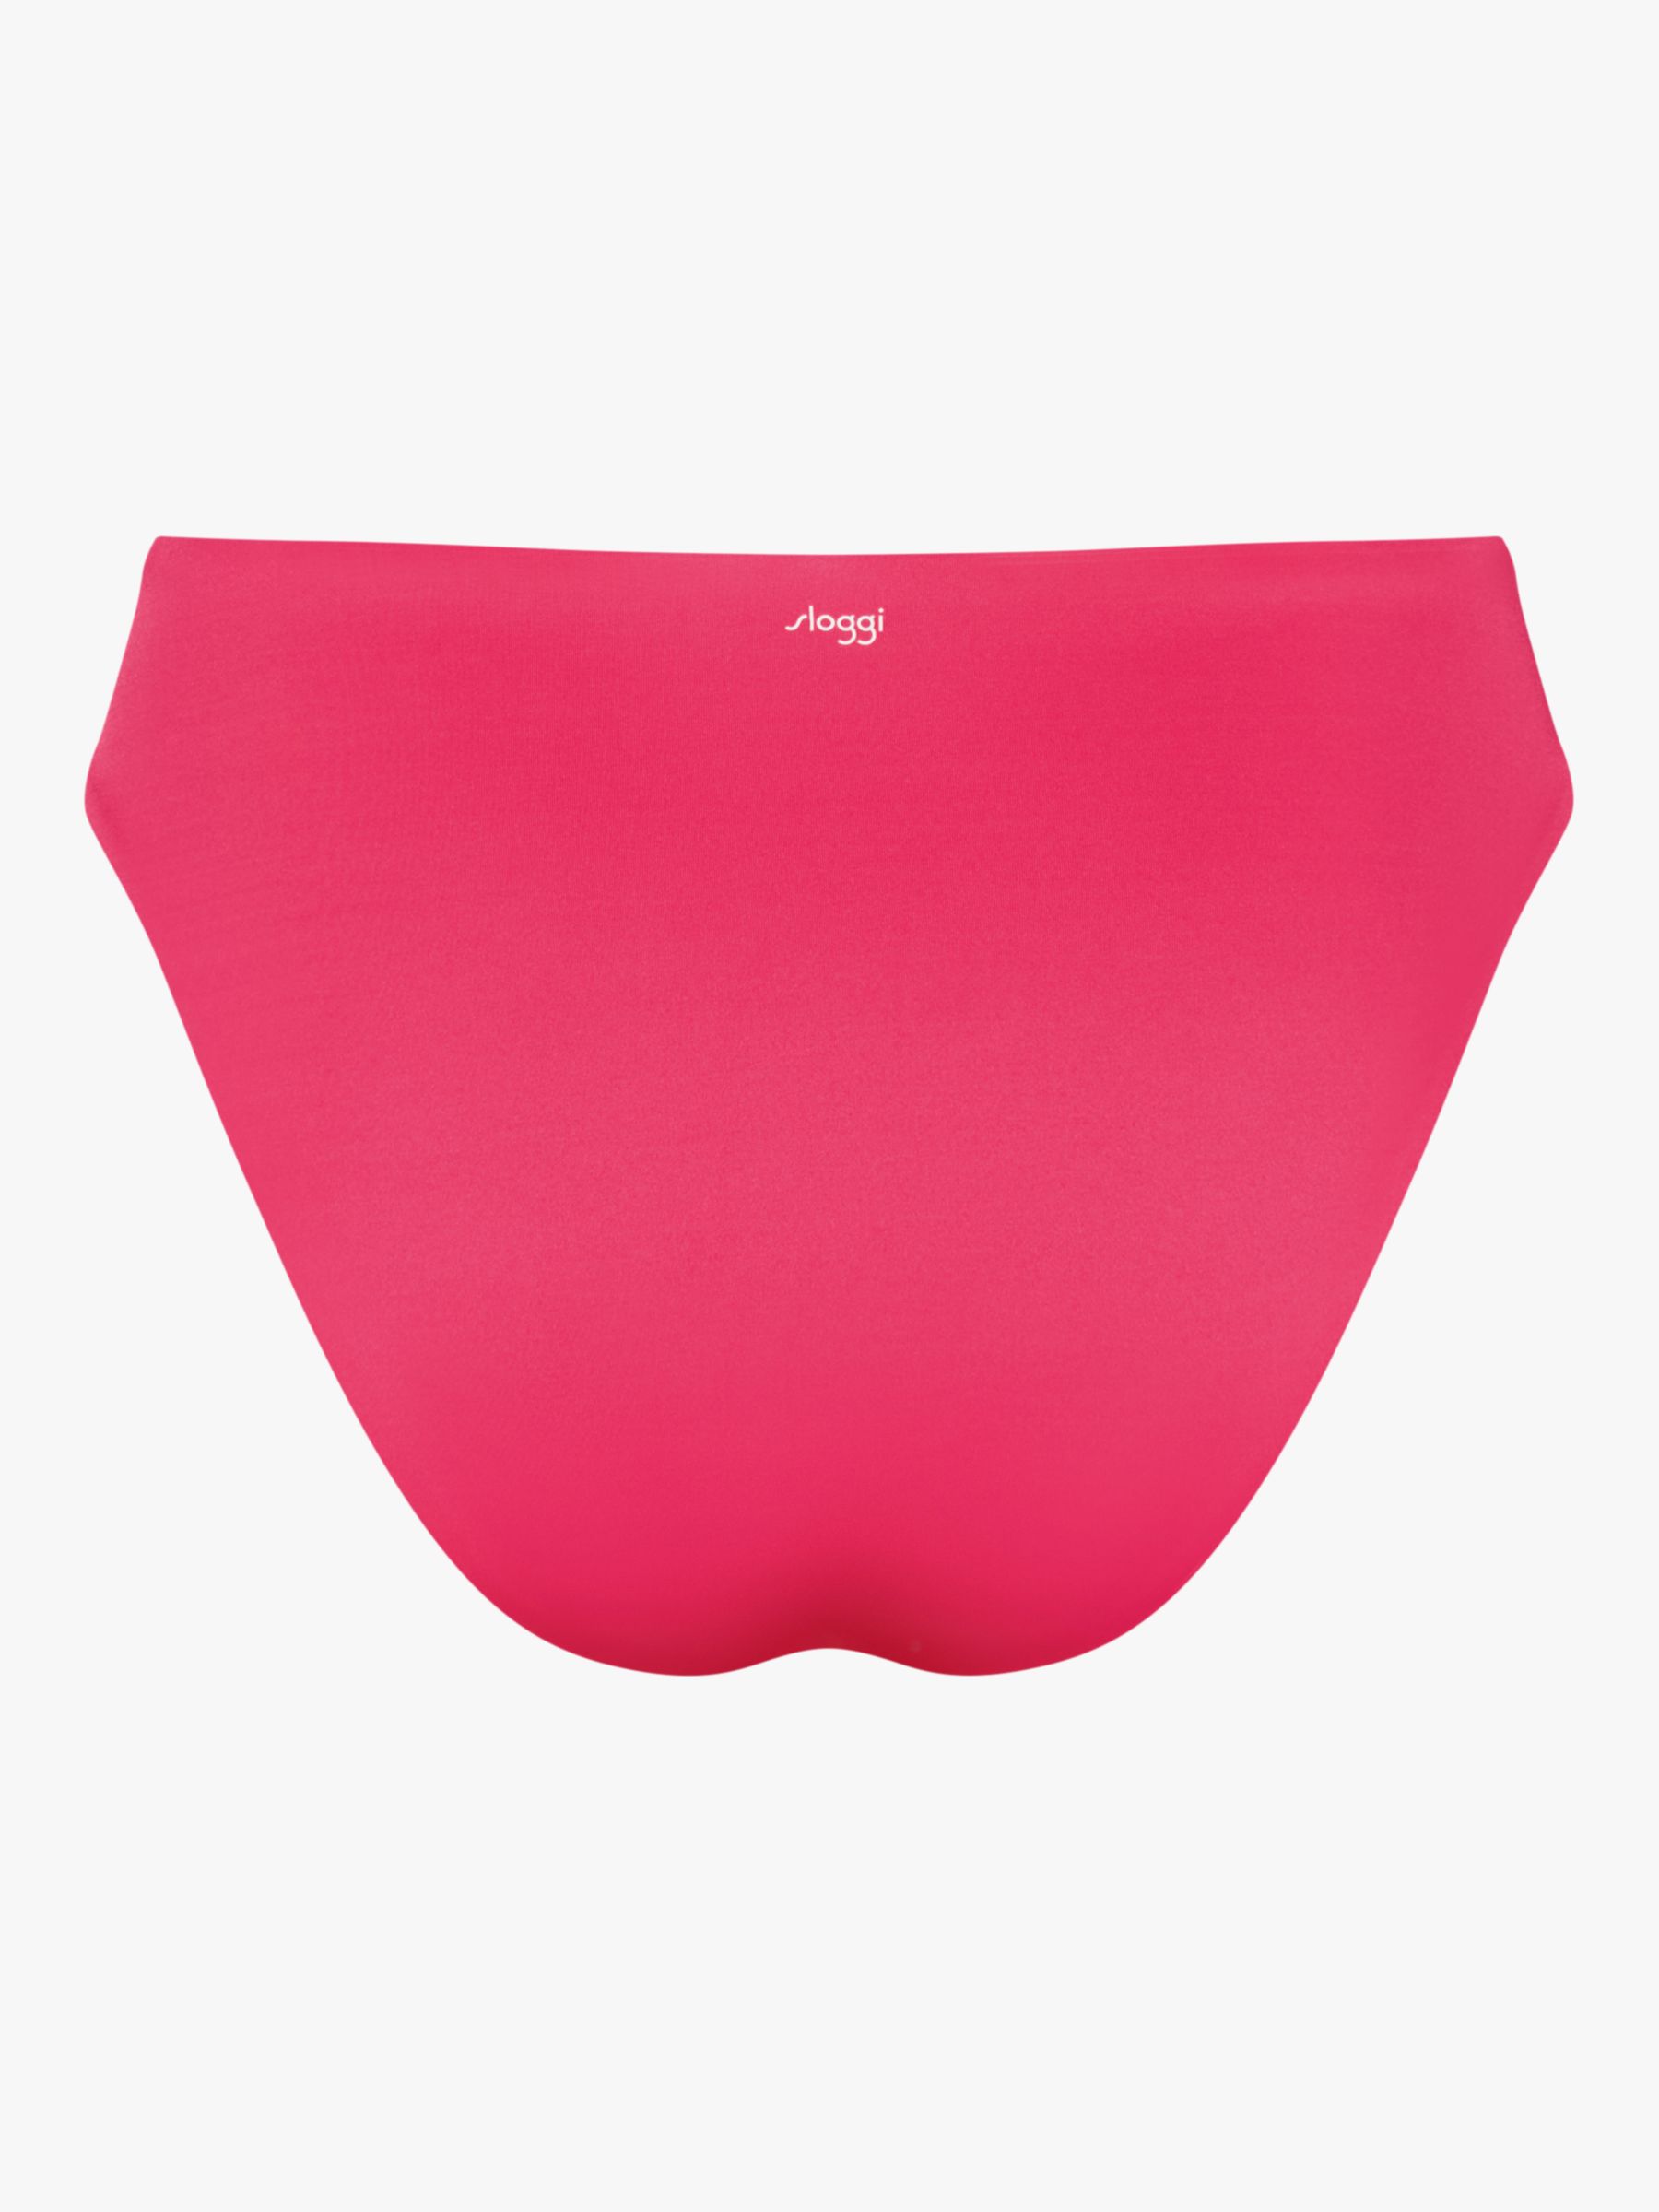 sloggi Shore Fornillo Reversible Bikini Bottoms, Pink/Orange, XS